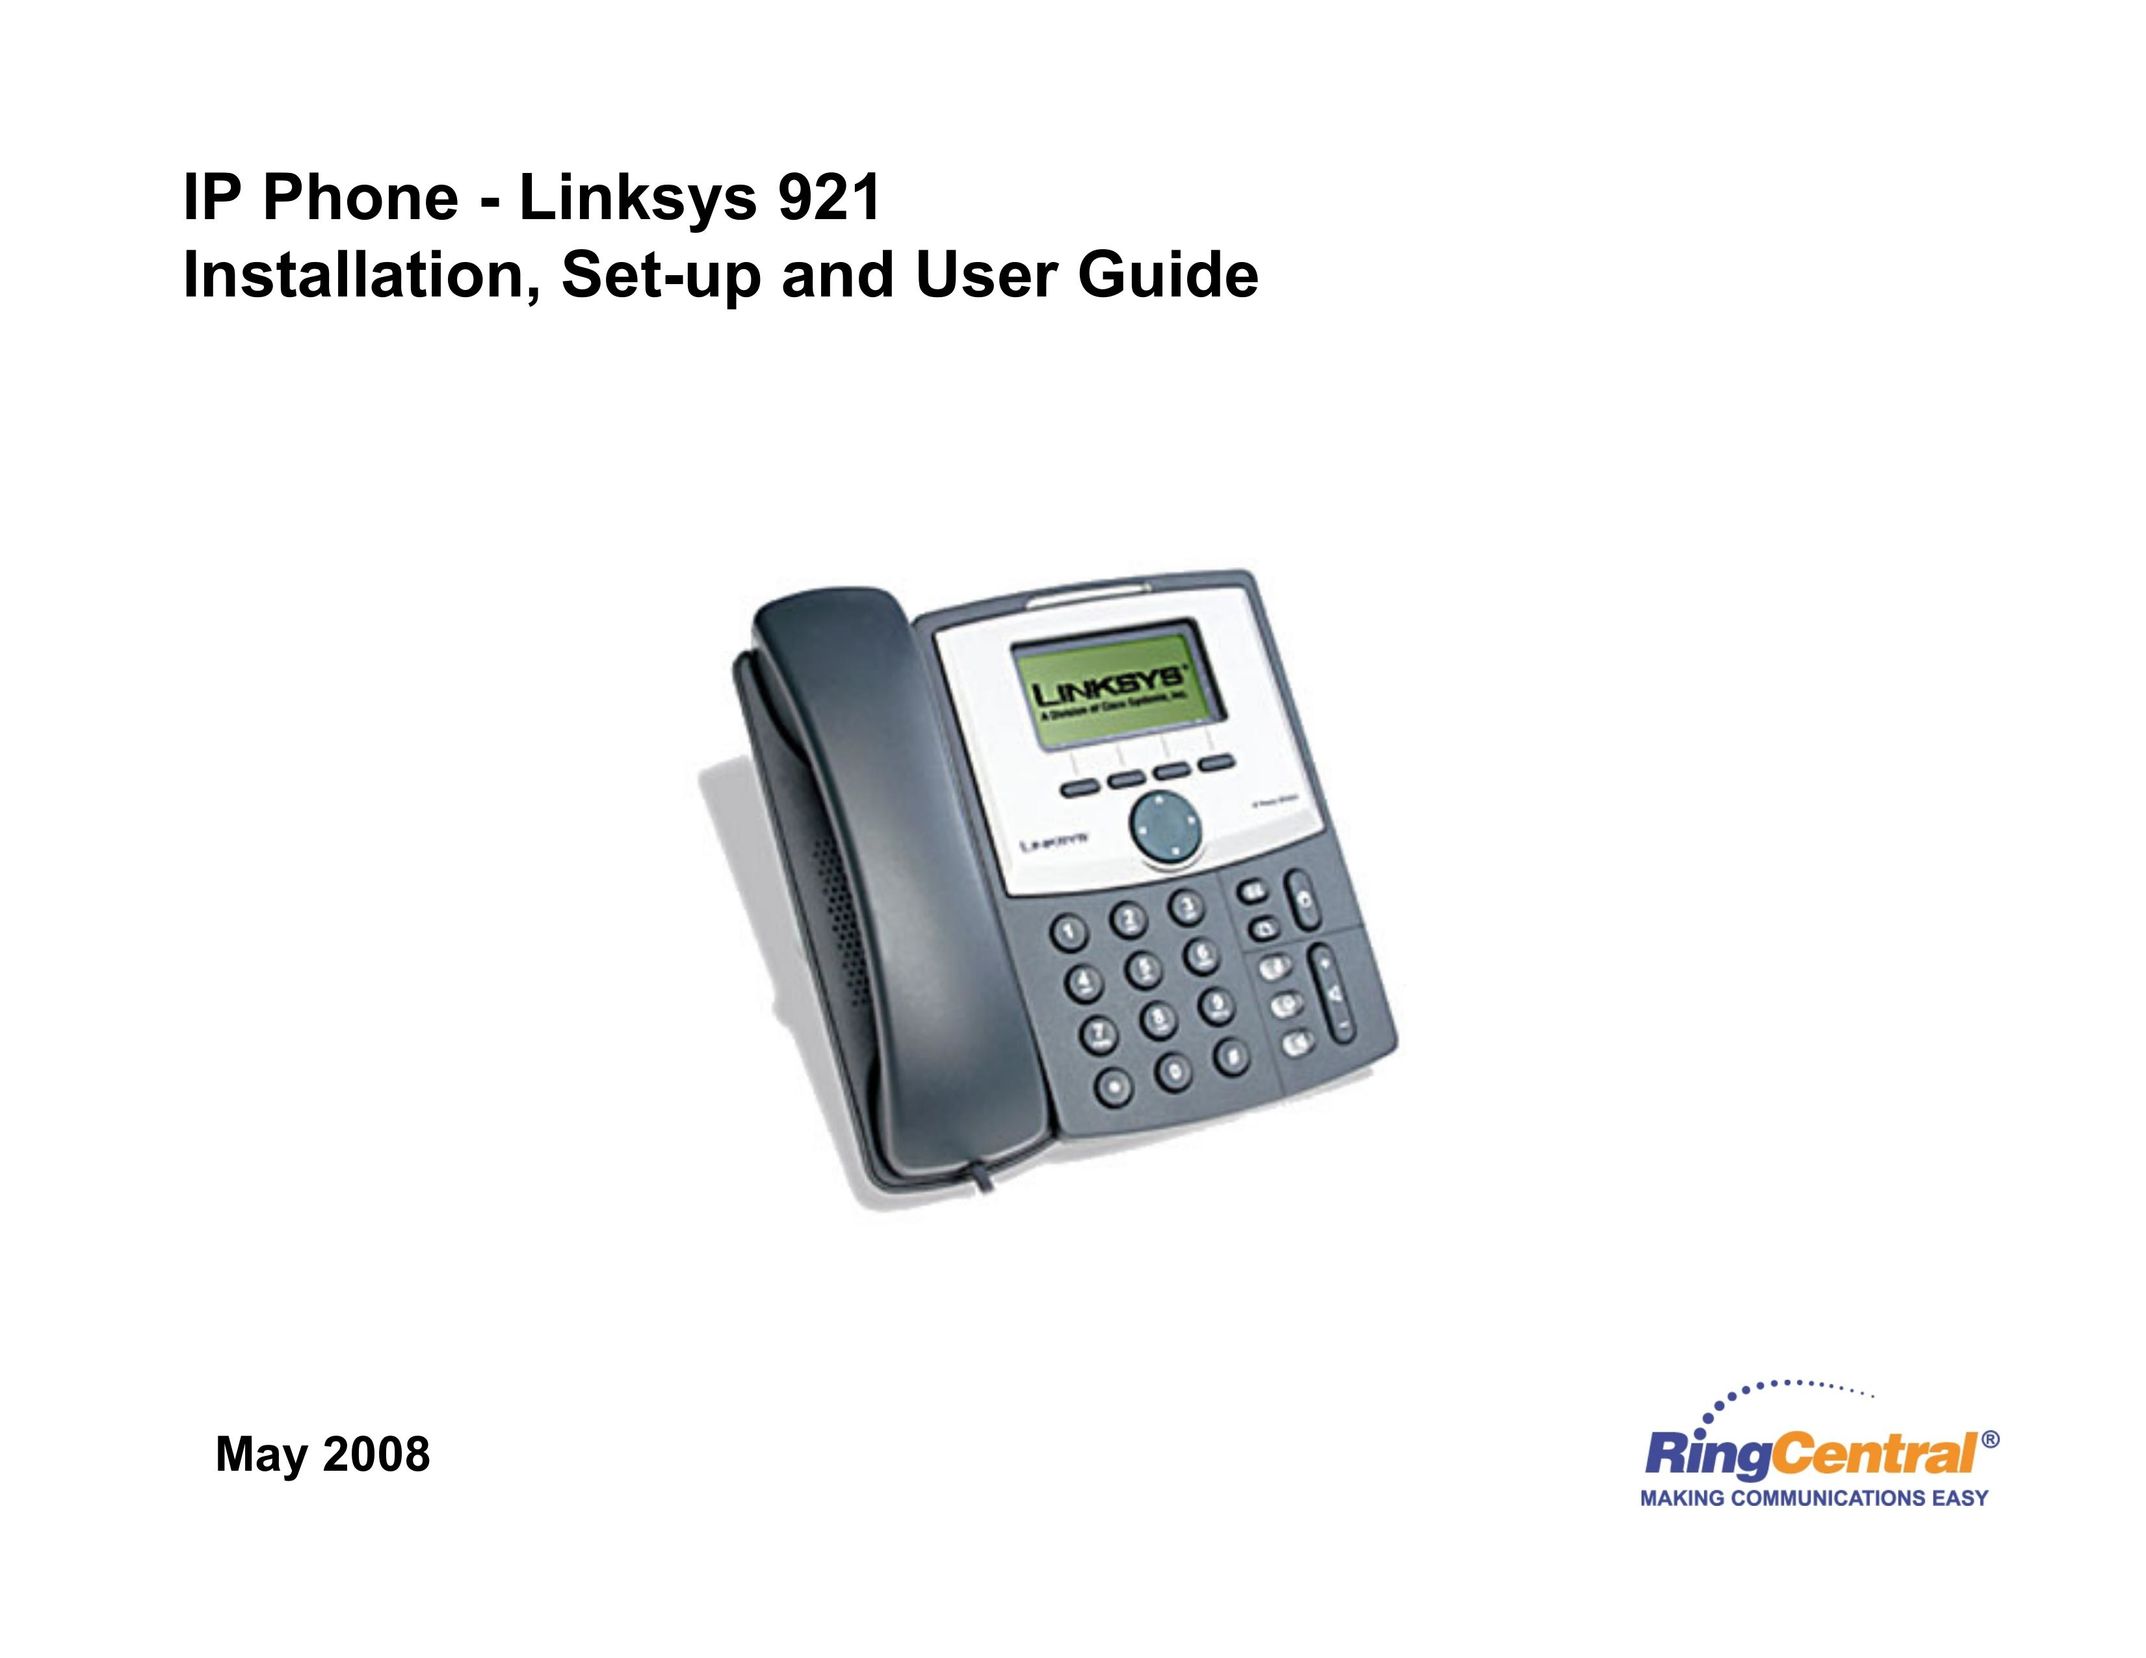 Linksys 921 IP Phone User Manual